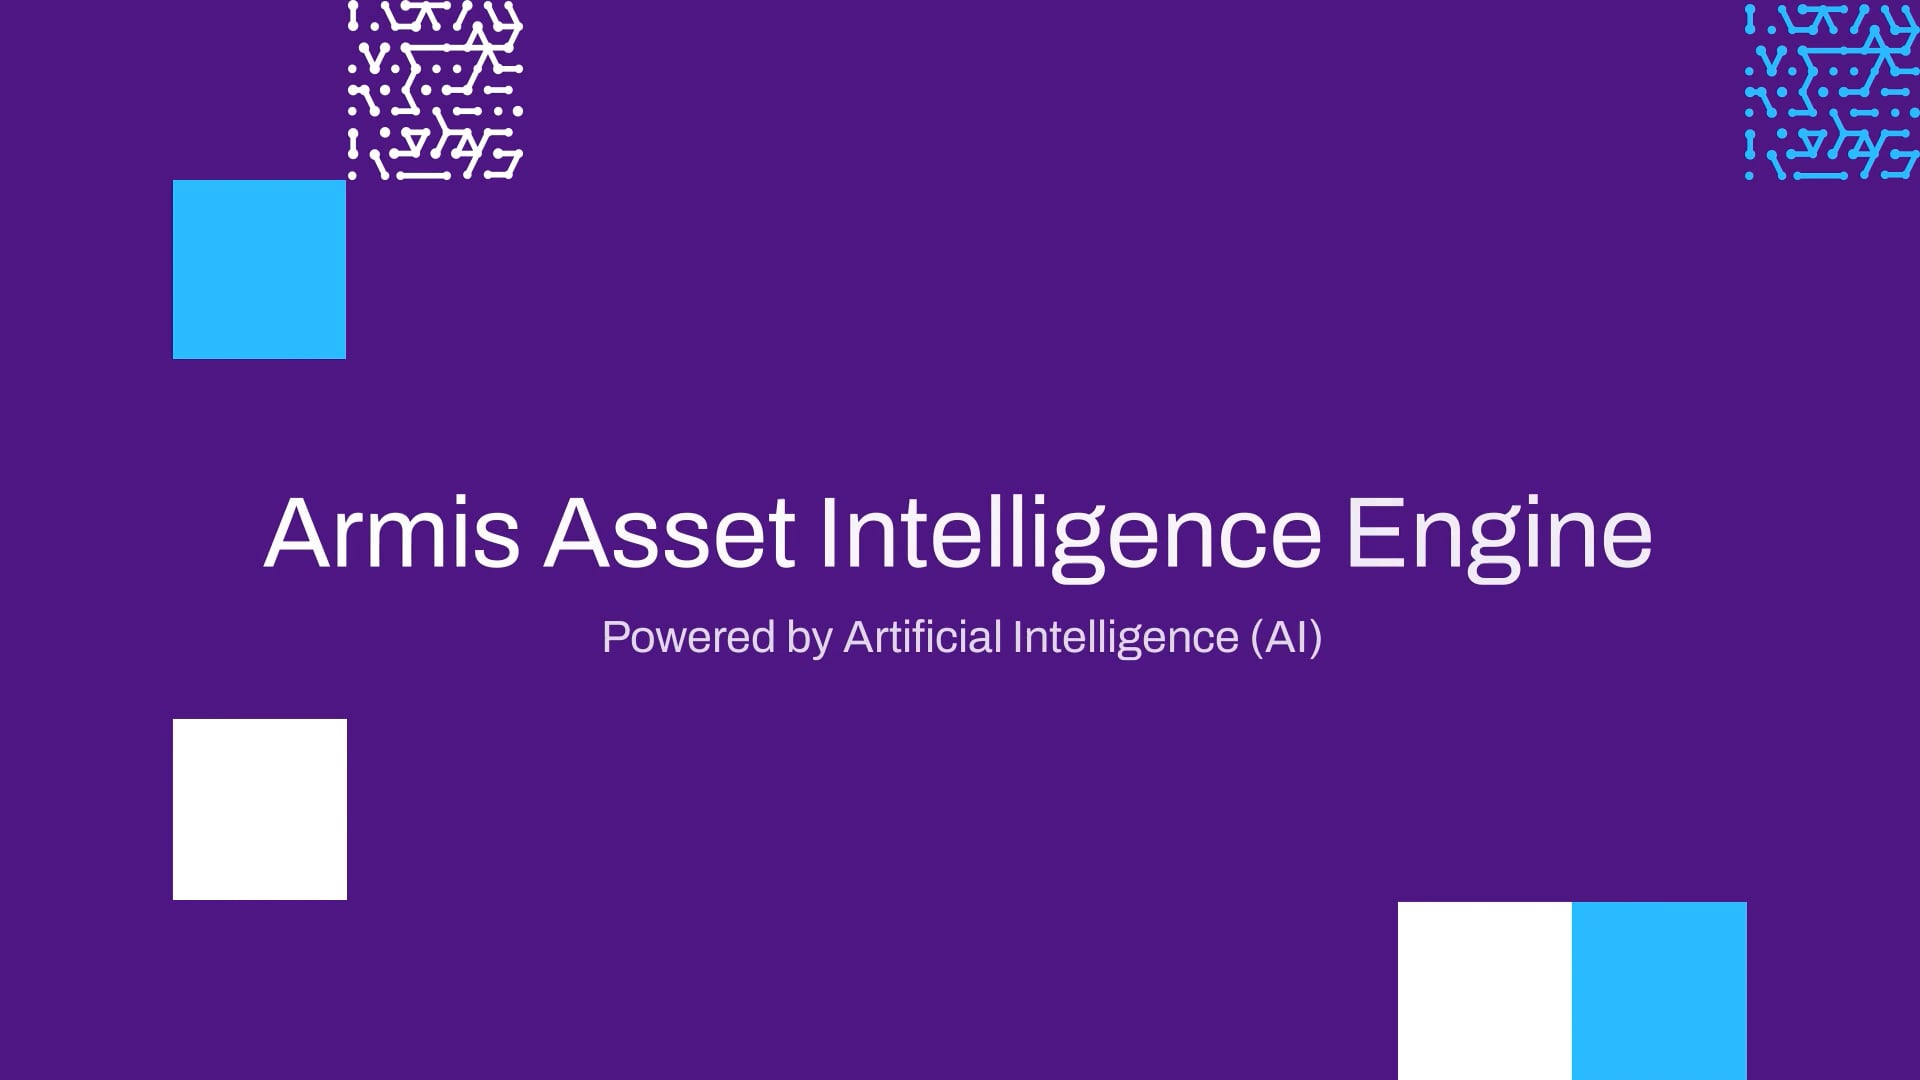 Armis Asset Intelligence Engine overview video thumbnail